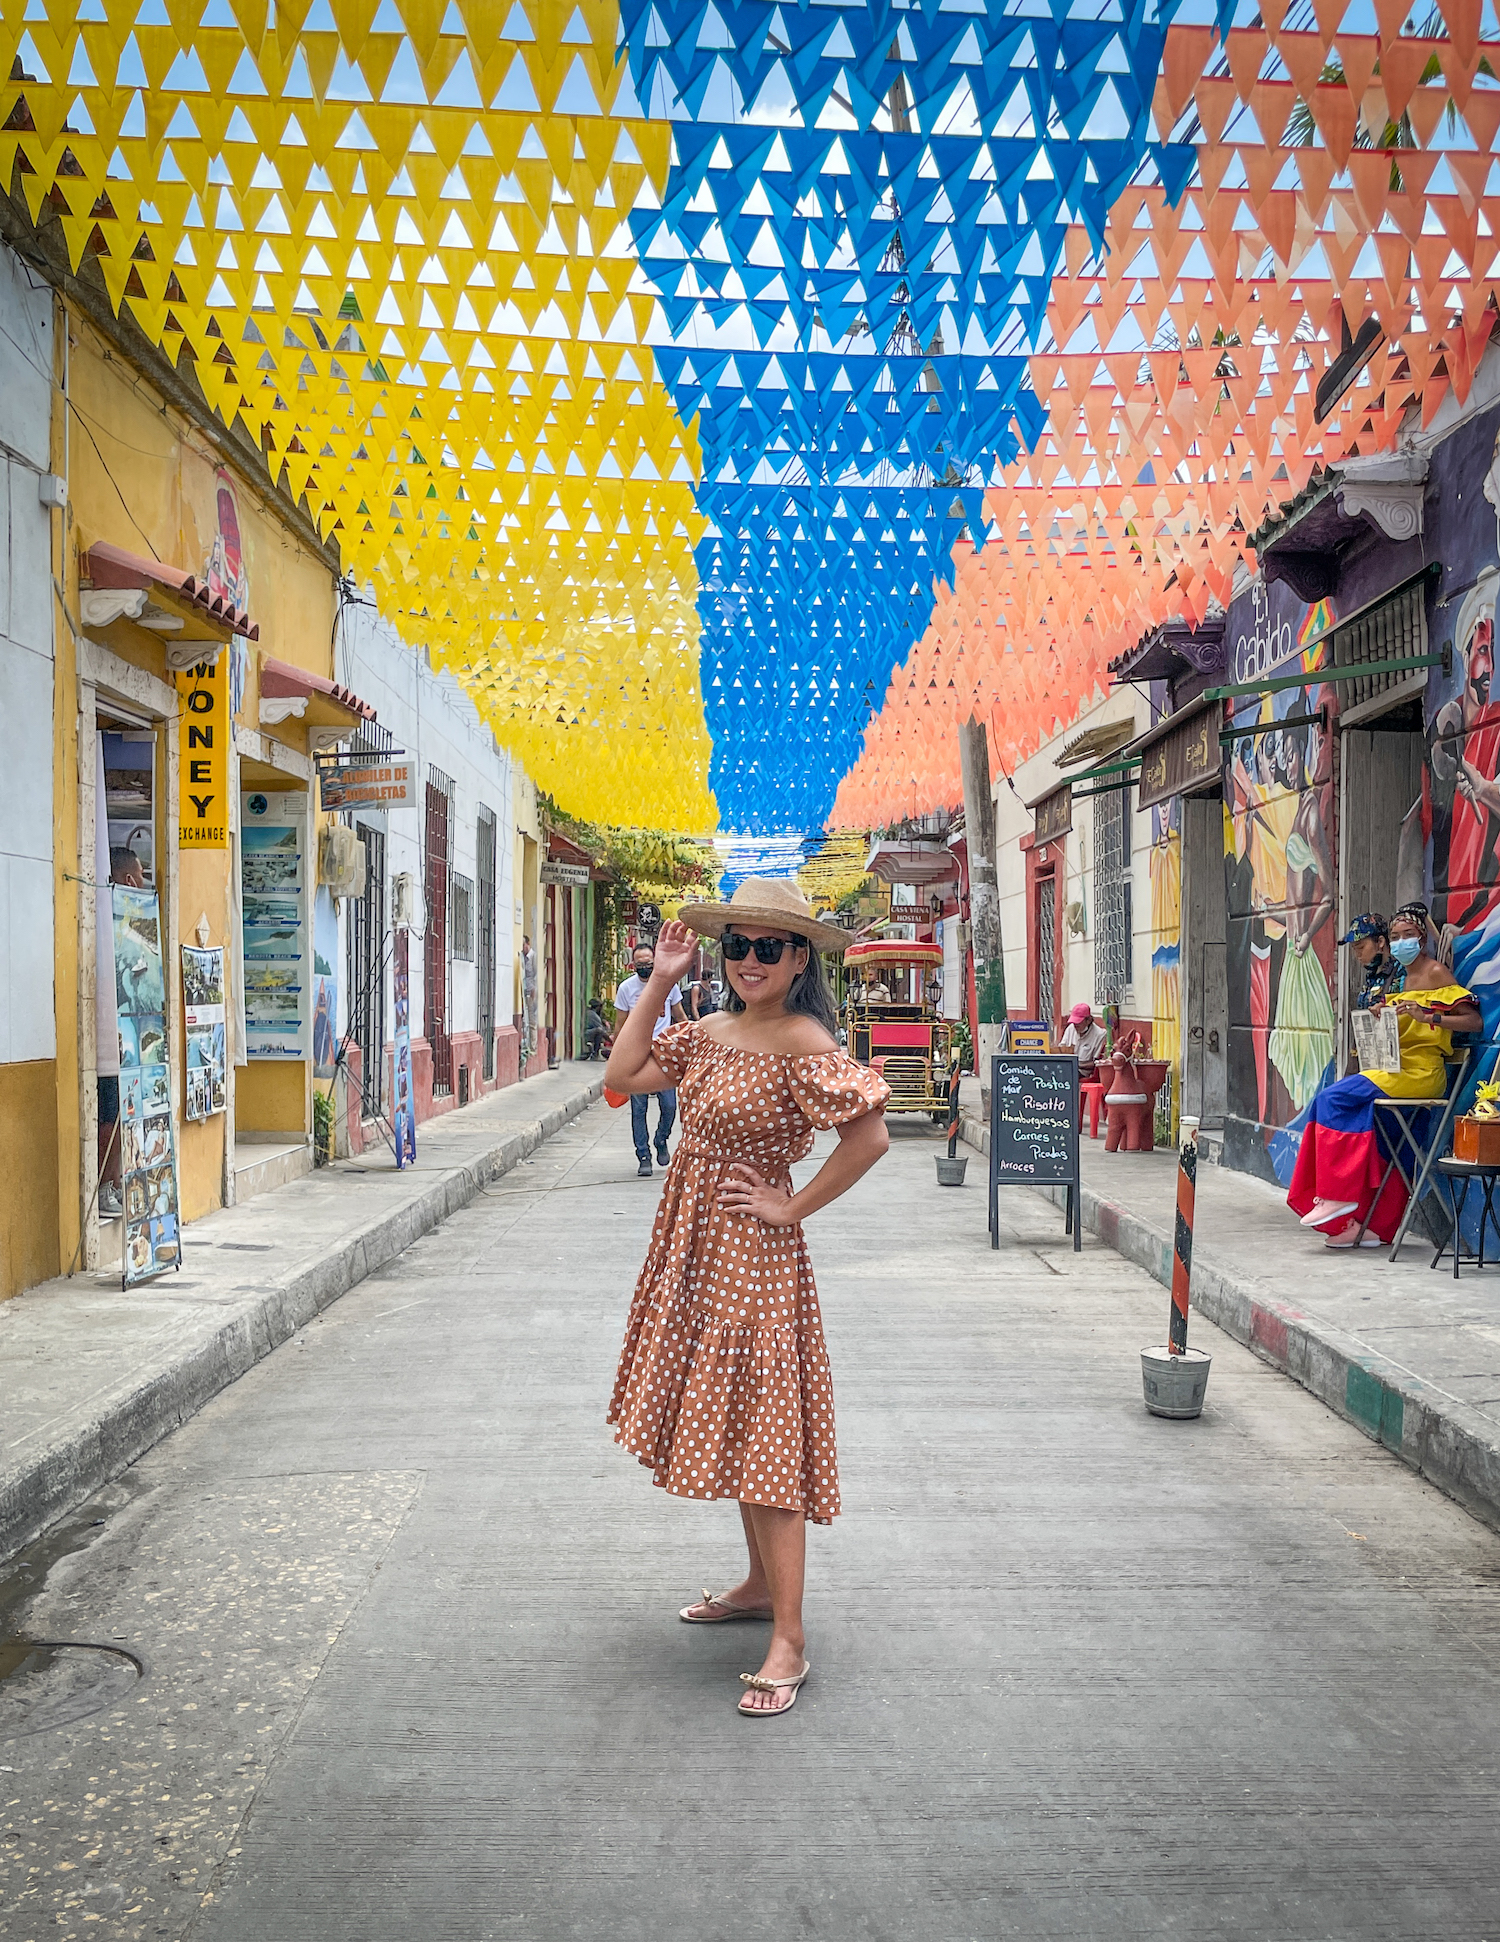 Flag street in Cartagena Colombia Caroline Constas Polka Dot Dress Oka-b Sandals Lack of Color Palma straw Hat